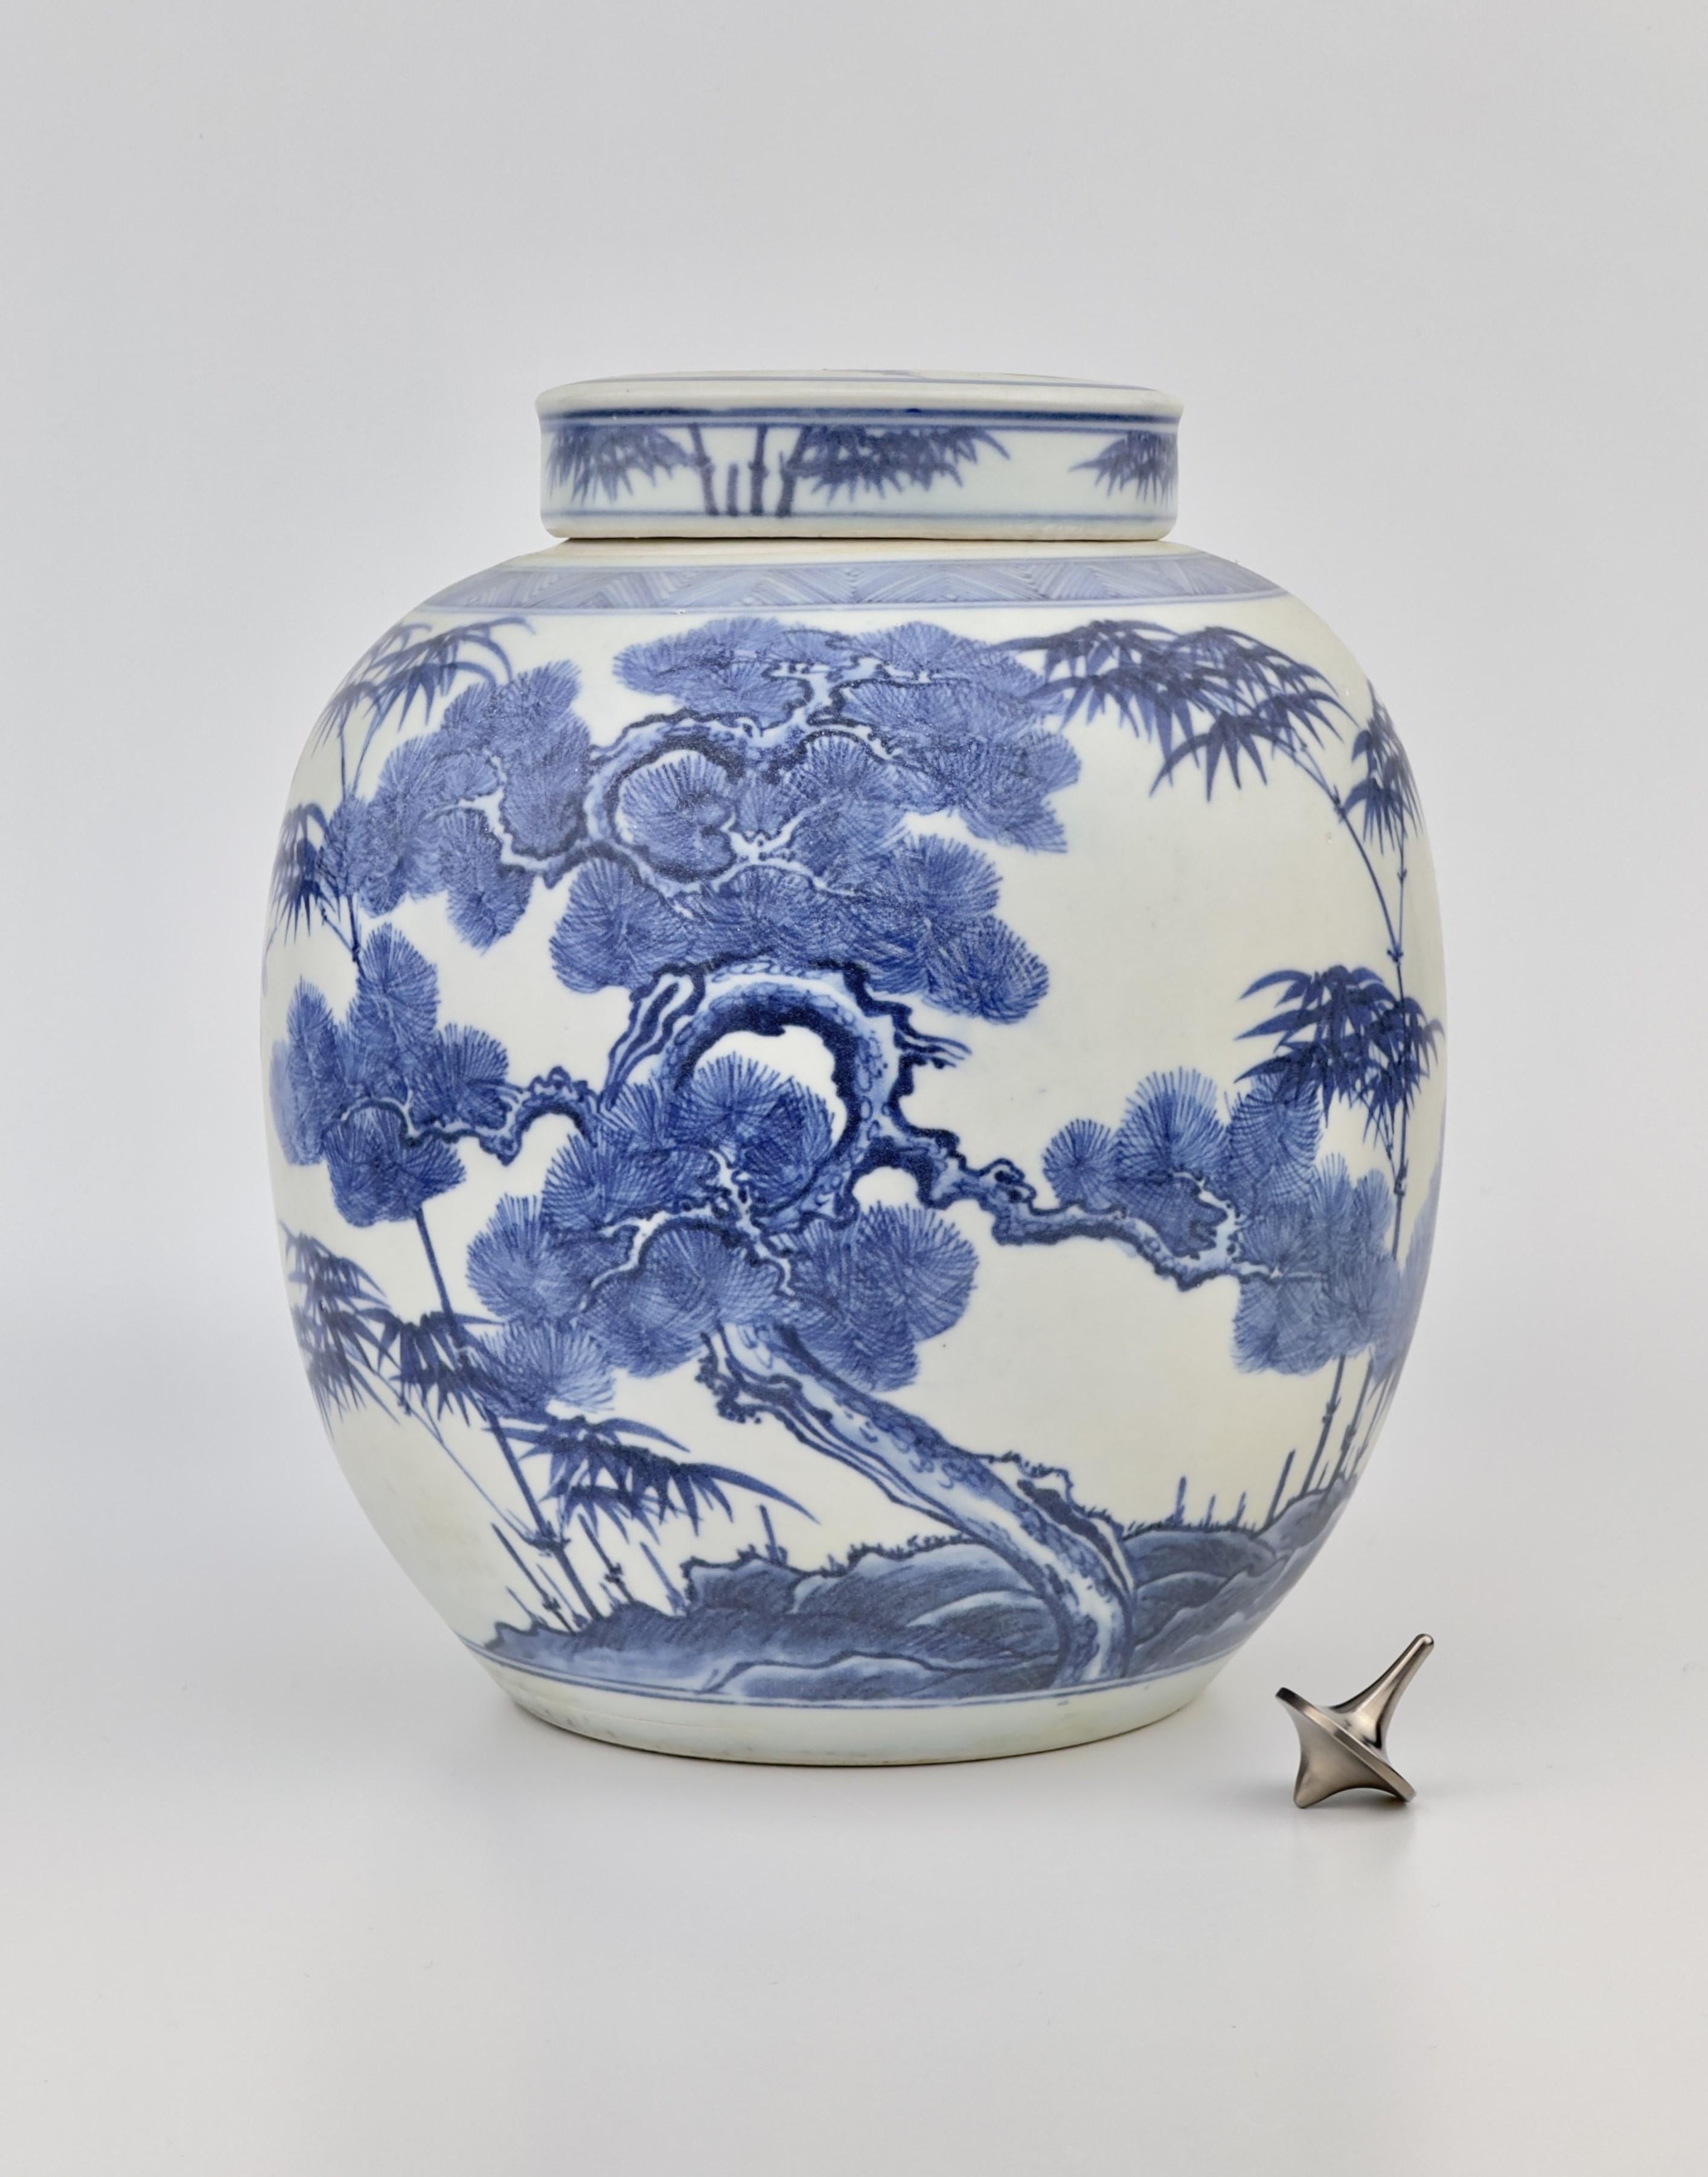 Chinese 'Three Friends Of Winter' Motif Jar, C 1725, Qing Dynasty, Yongzheng Era For Sale